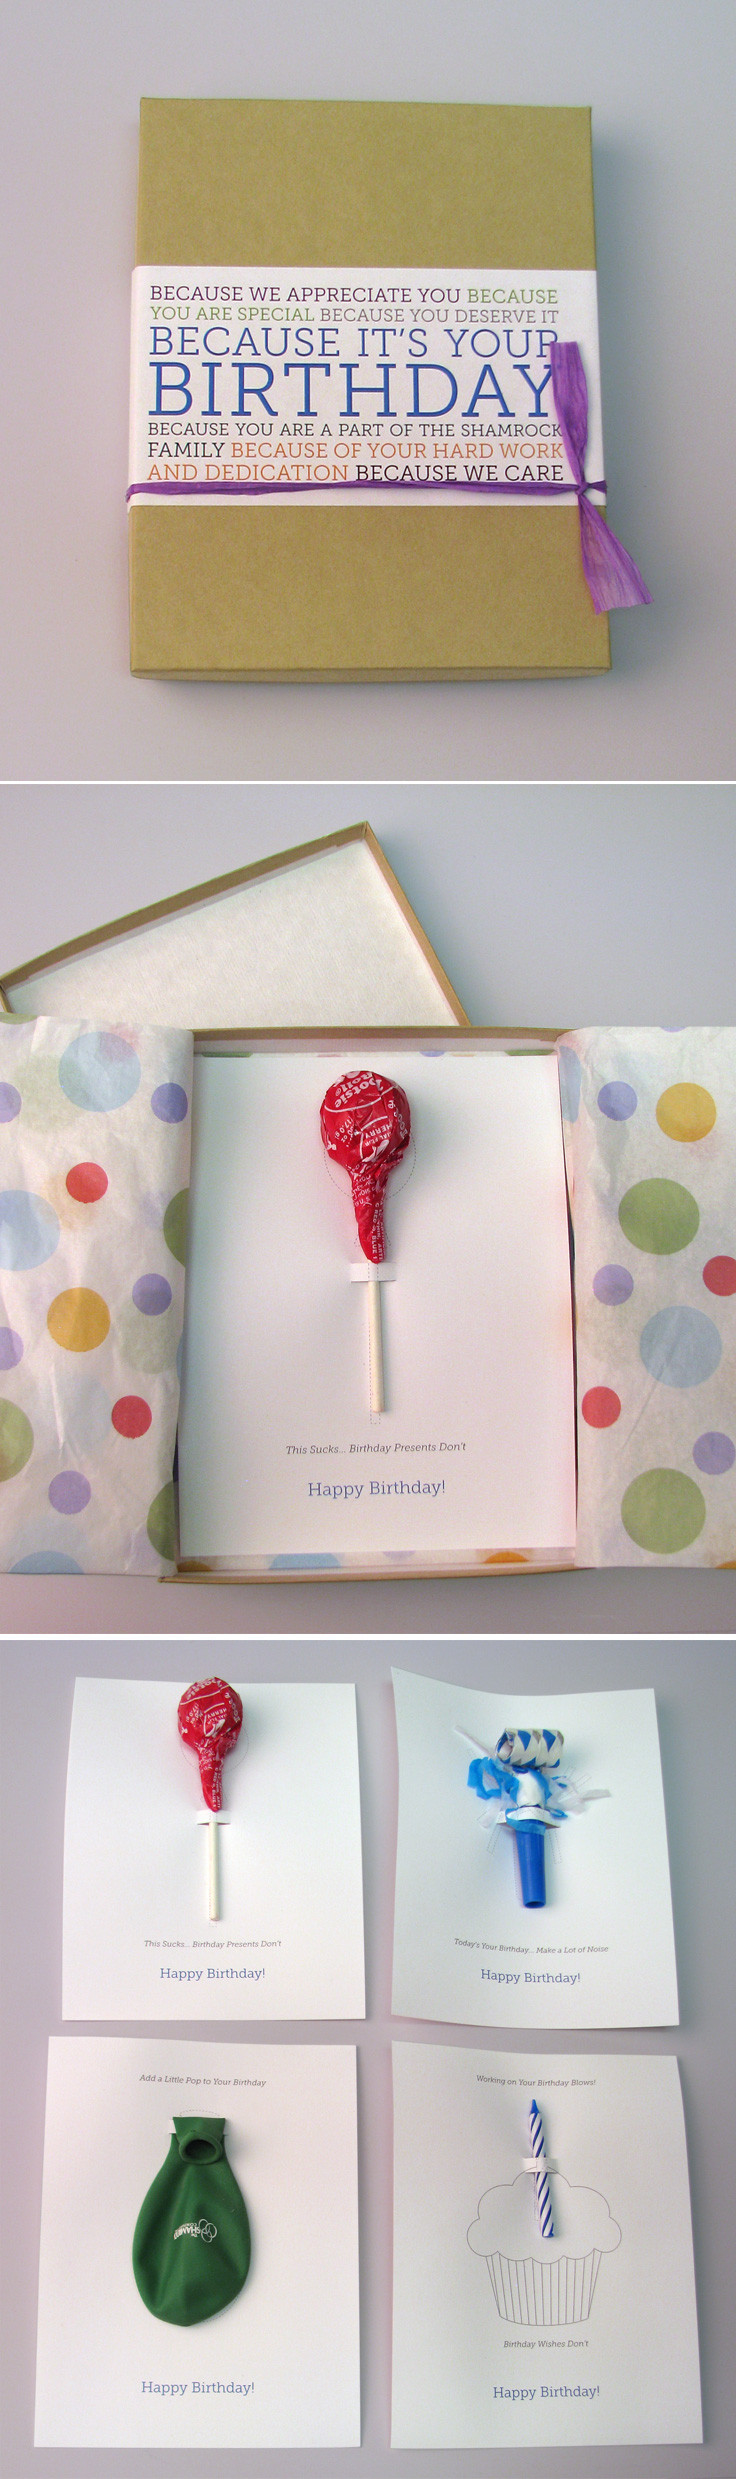 Employee Birthday Gift Ideas
 Shamrock employees receive a fun box on their Birthday